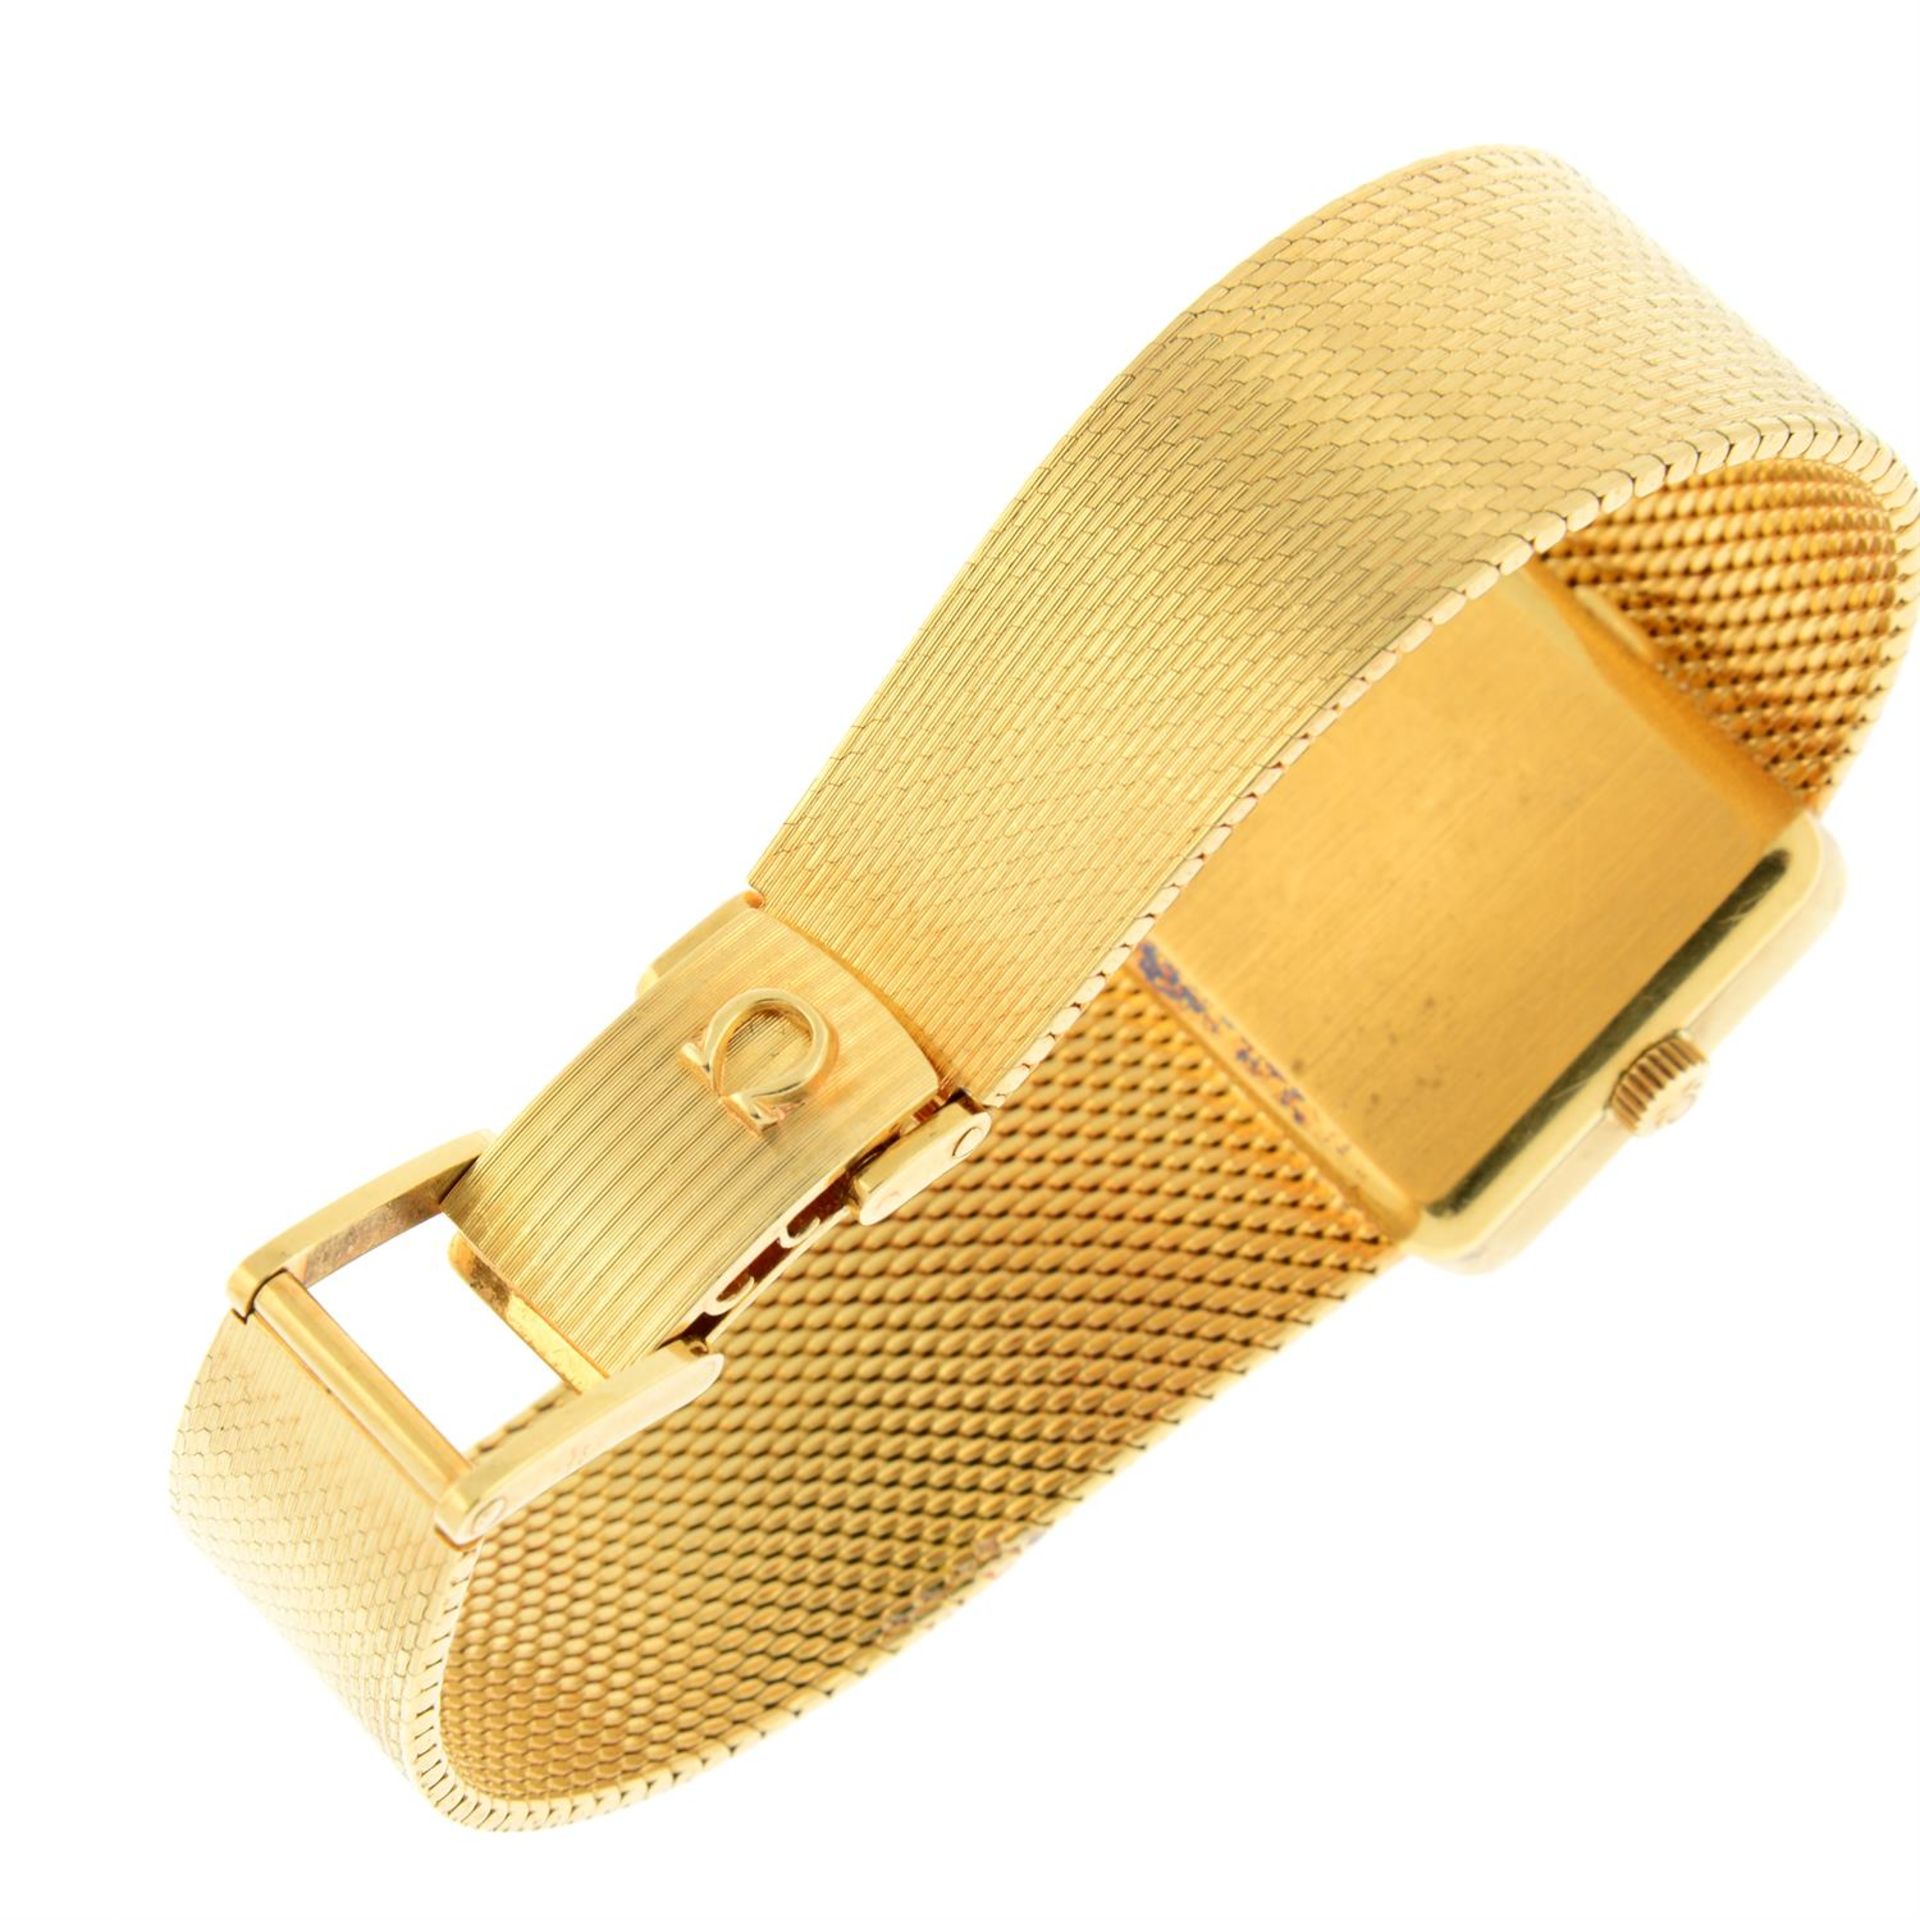 OMEGA - a yellow metal De Ville bracelet watch, 25x22mm. - Image 2 of 5